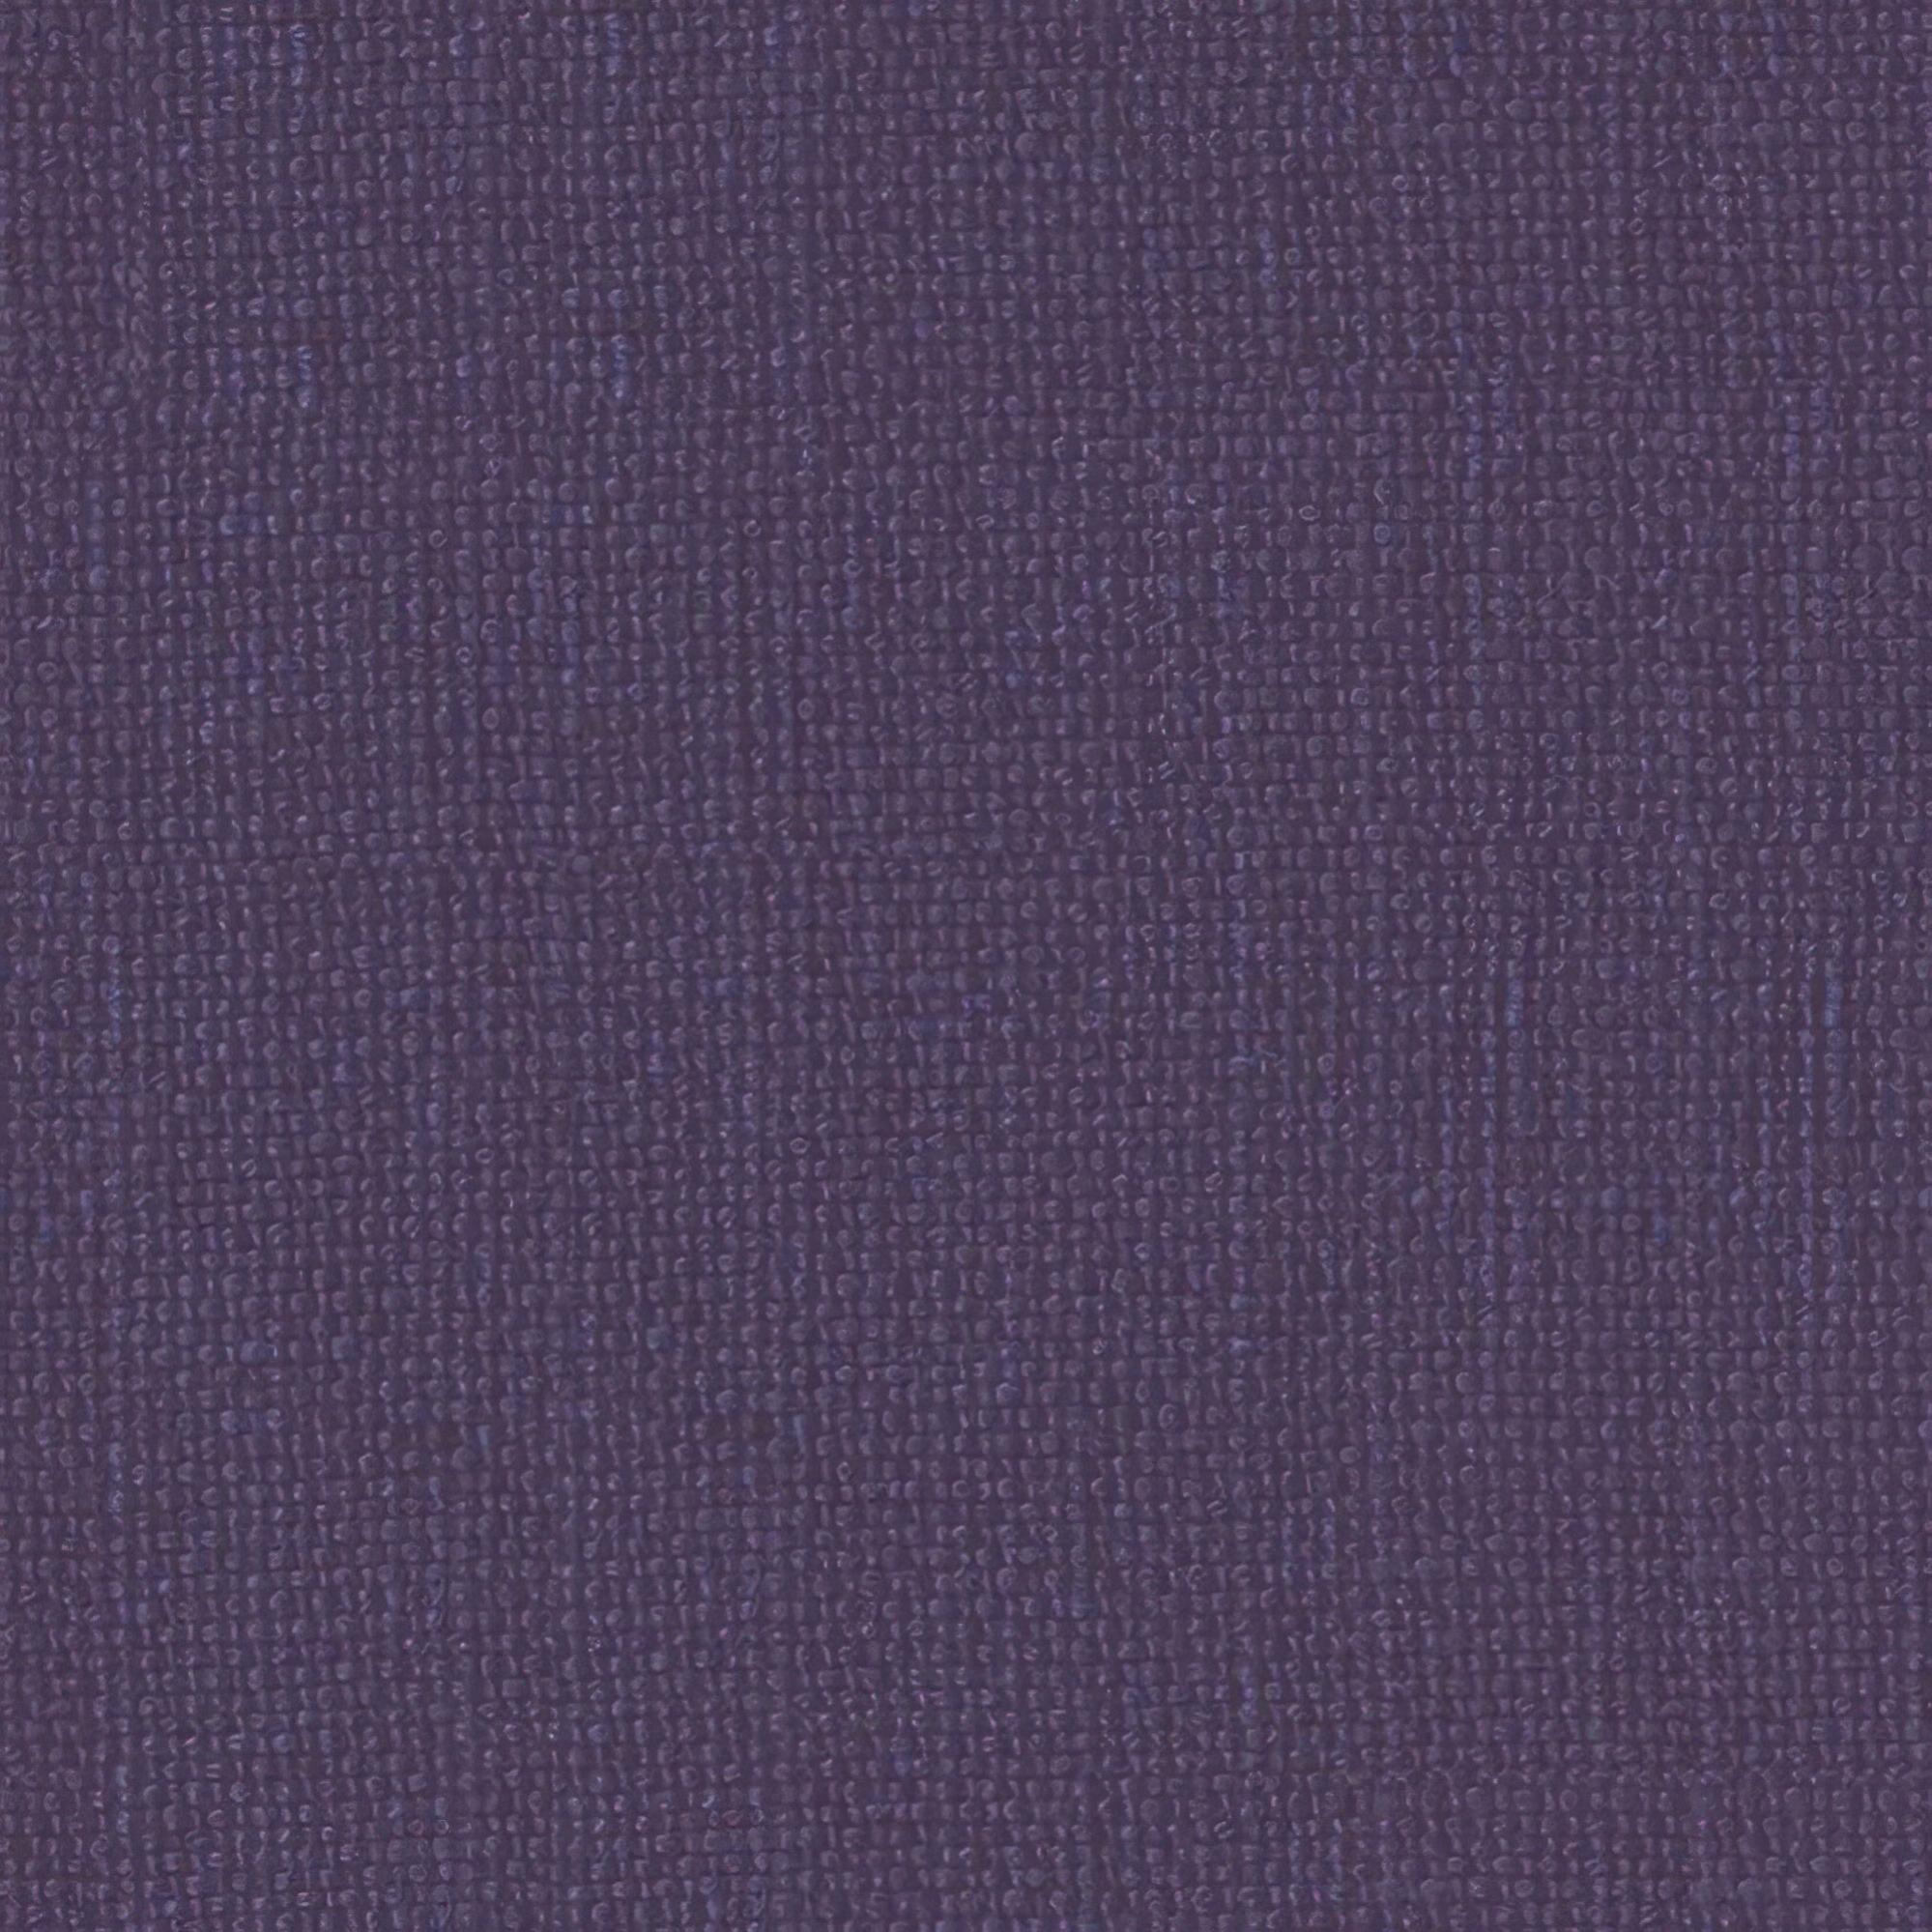 Tela al corte tapicería lino country morado ancho 140 cm